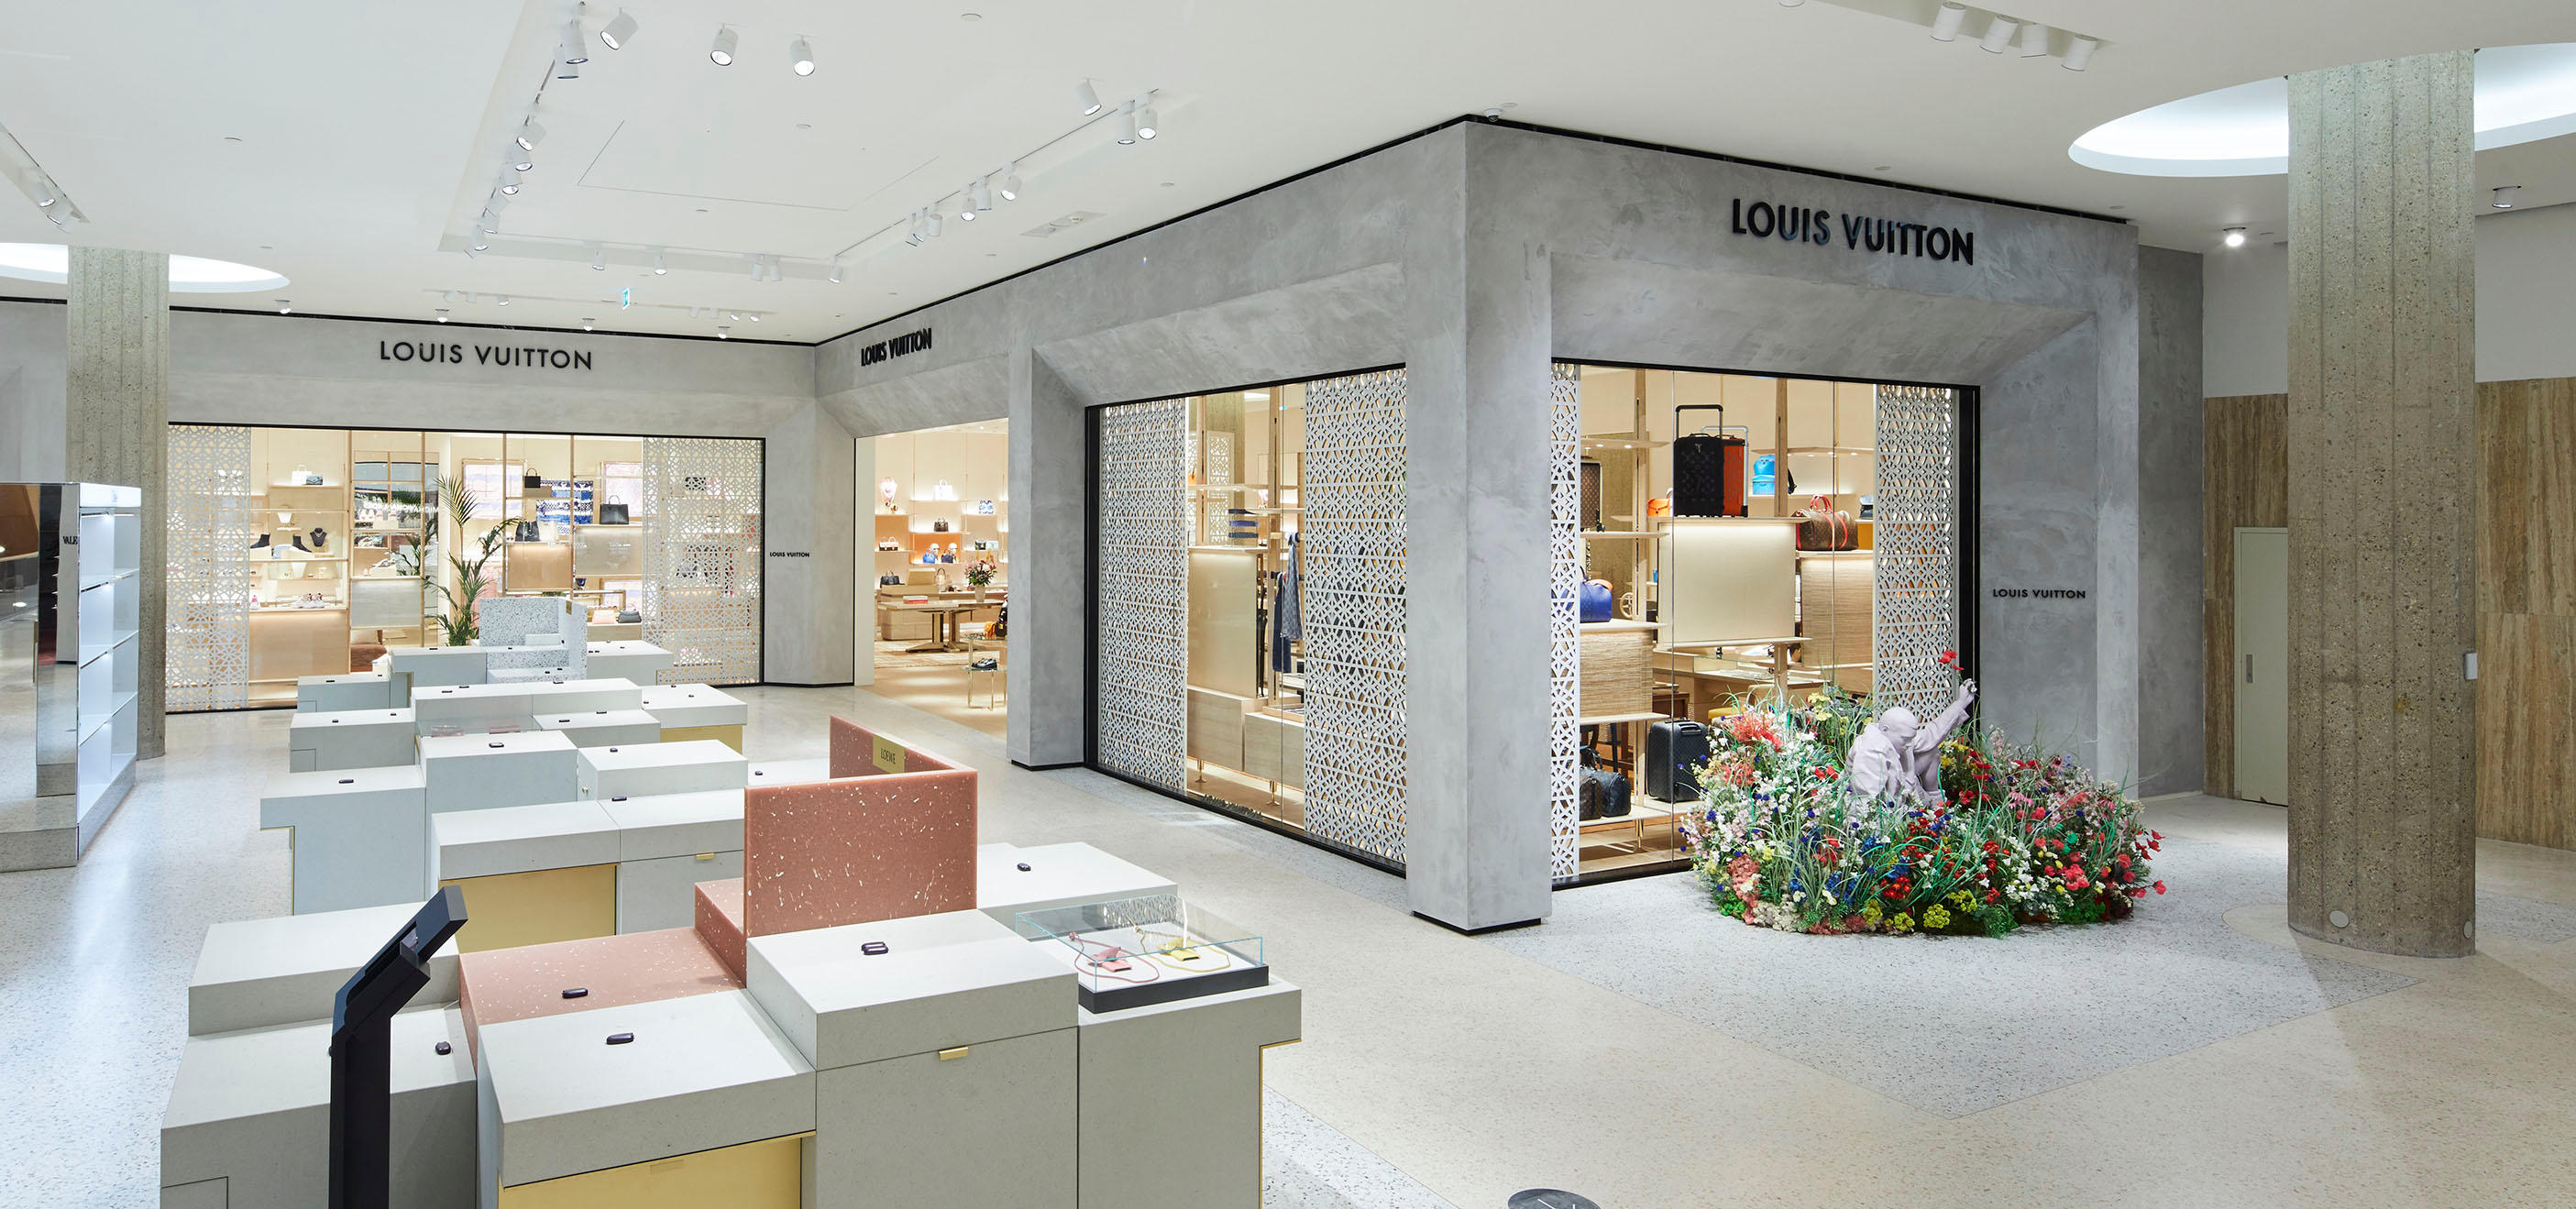 Louis Vuitton Opent Boetiek In Rotterdam